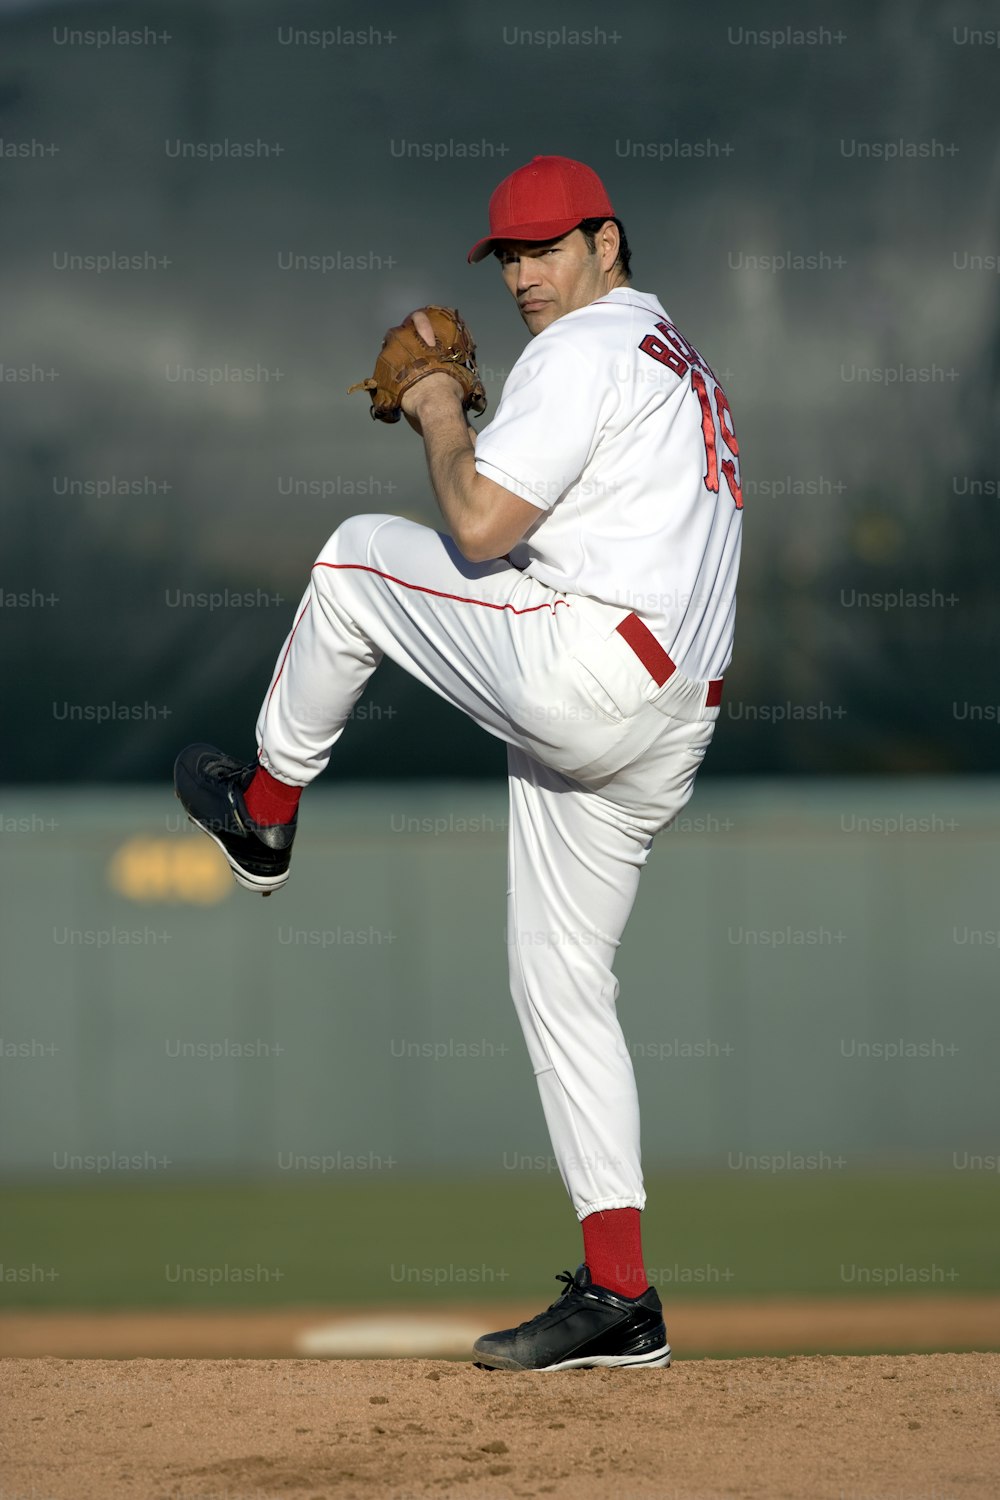 a man in a baseball uniform pitching a baseball